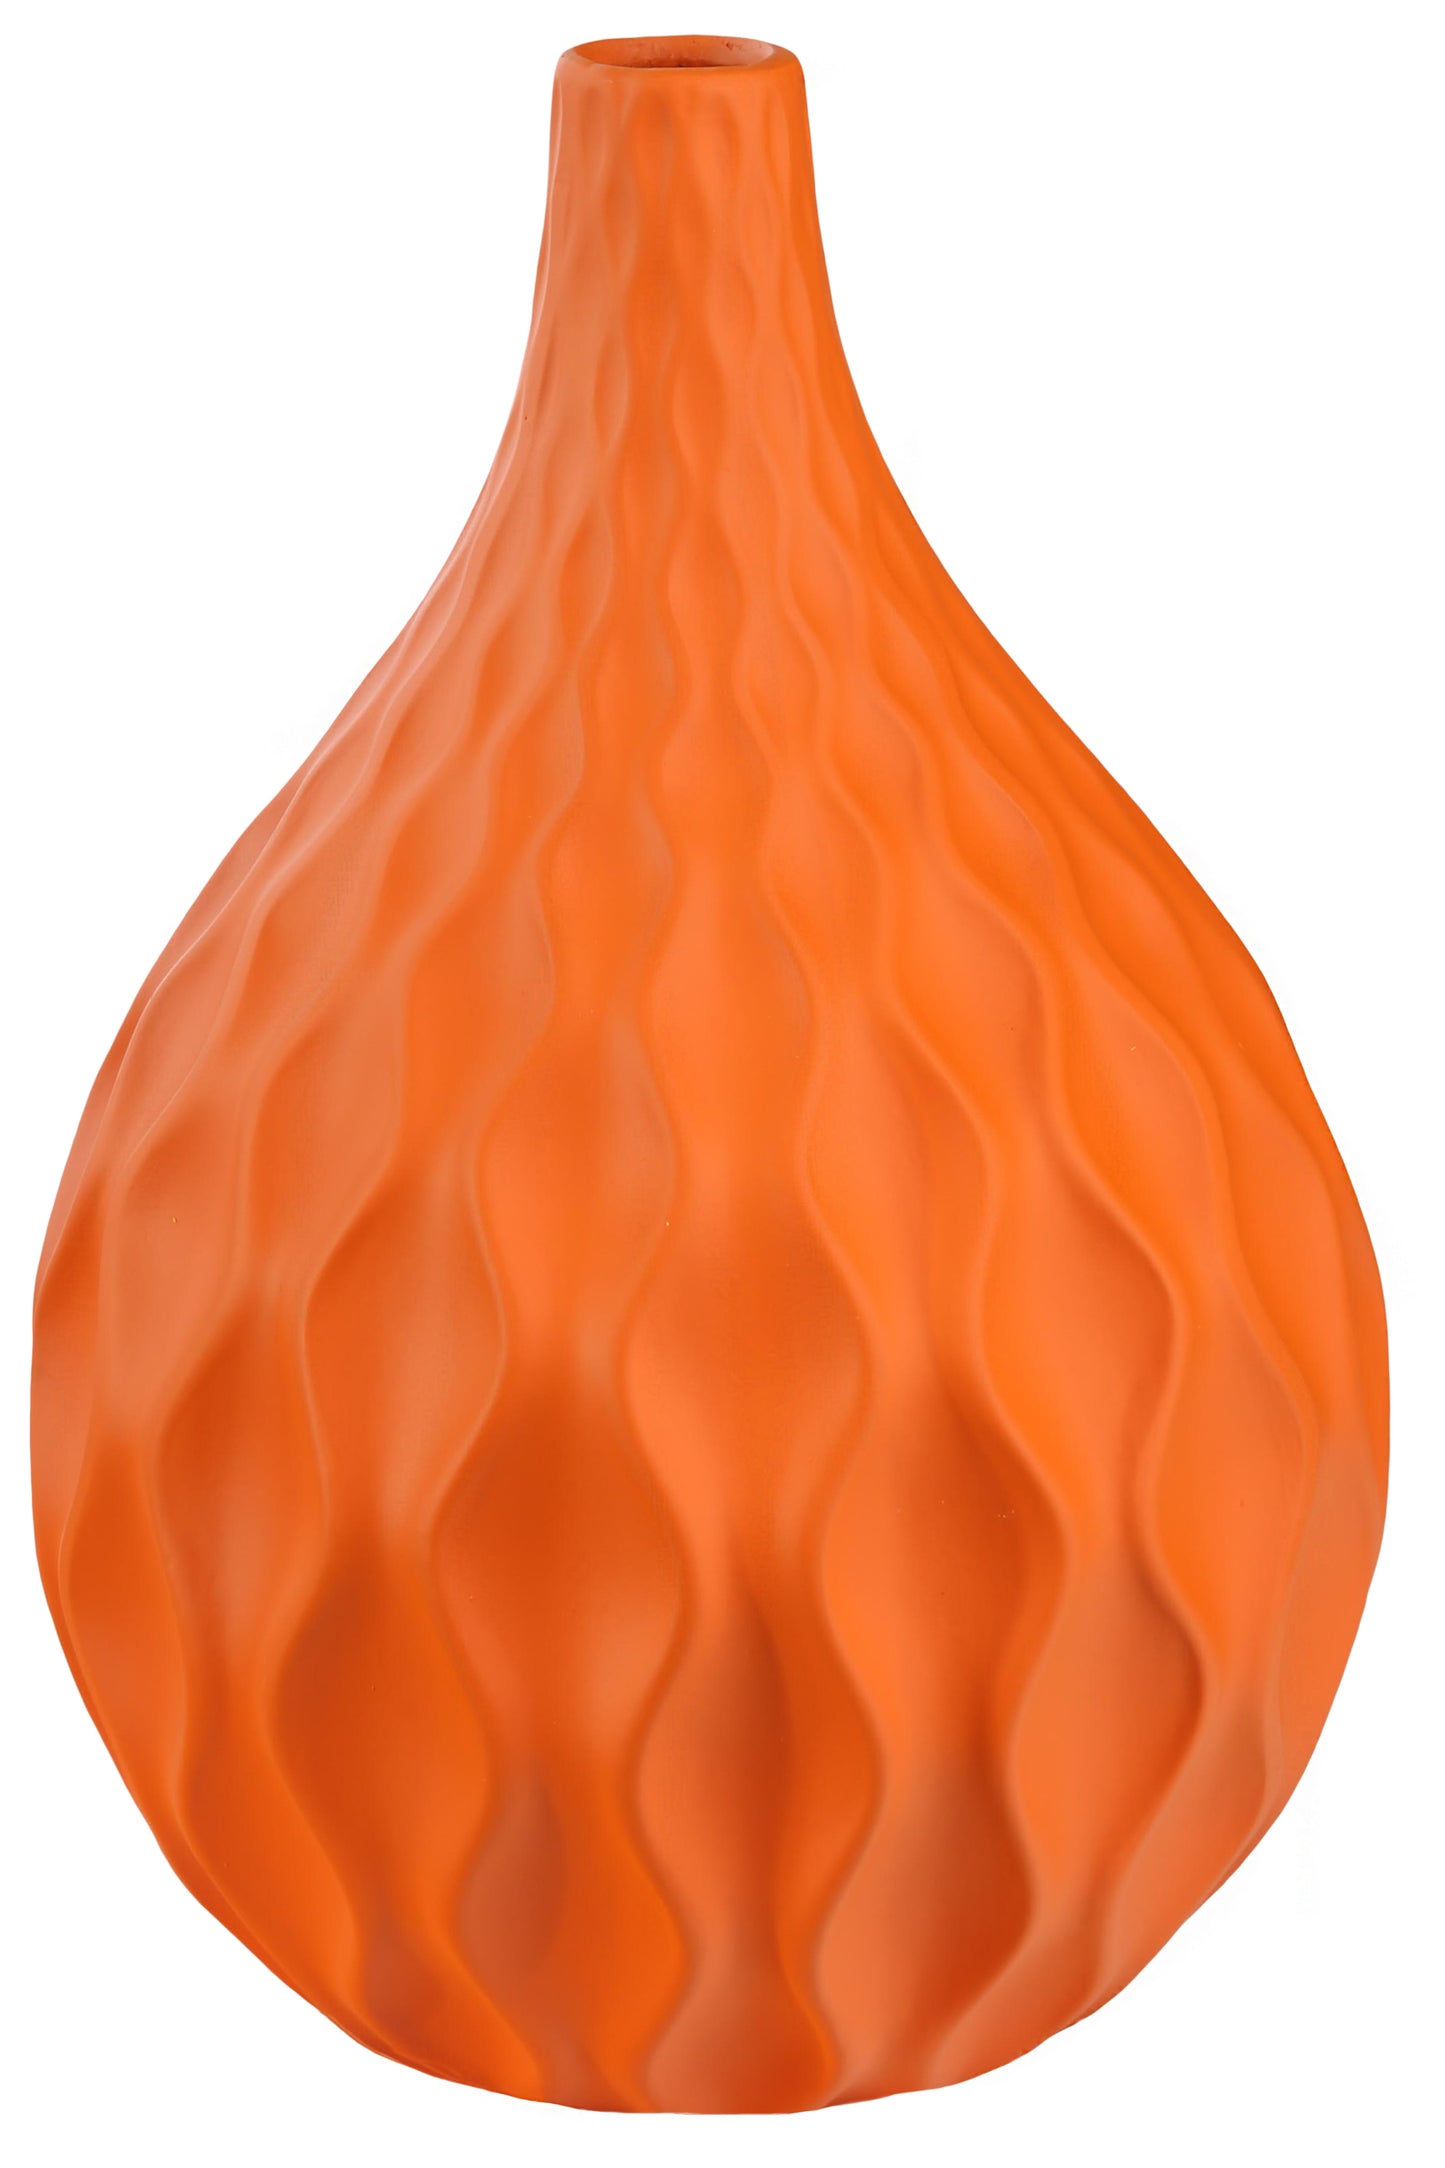 Ceramic Round Vase with Round Lip, Embossed Wave Design and Rounded Bottom Matte Finish Orange